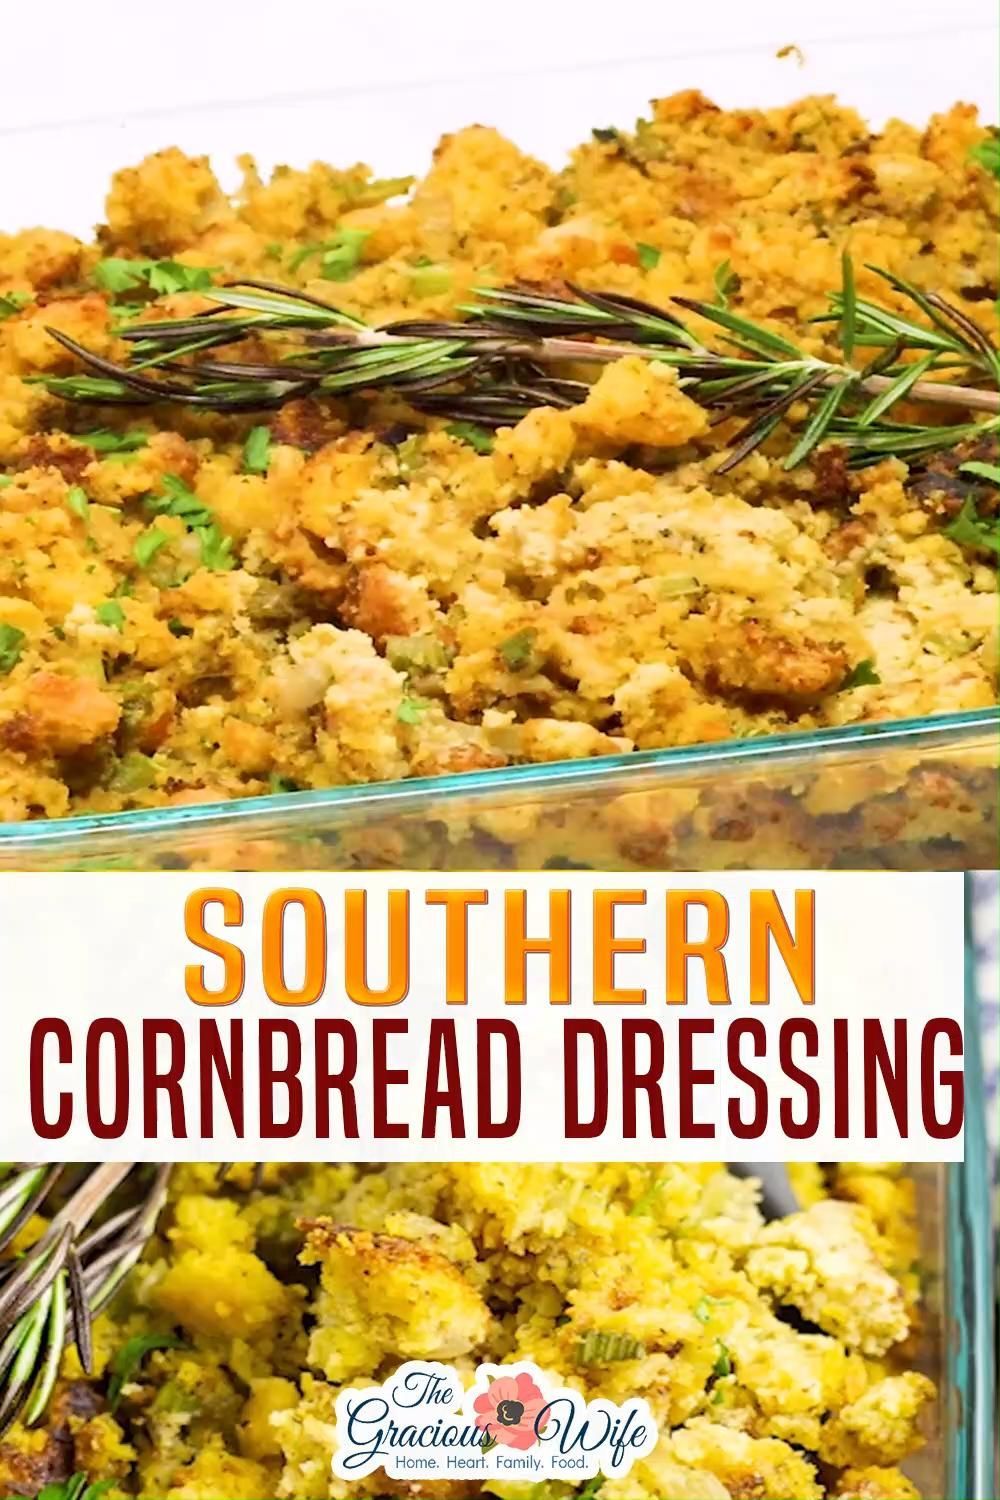 19 dressing recipes cornbread easy ideas